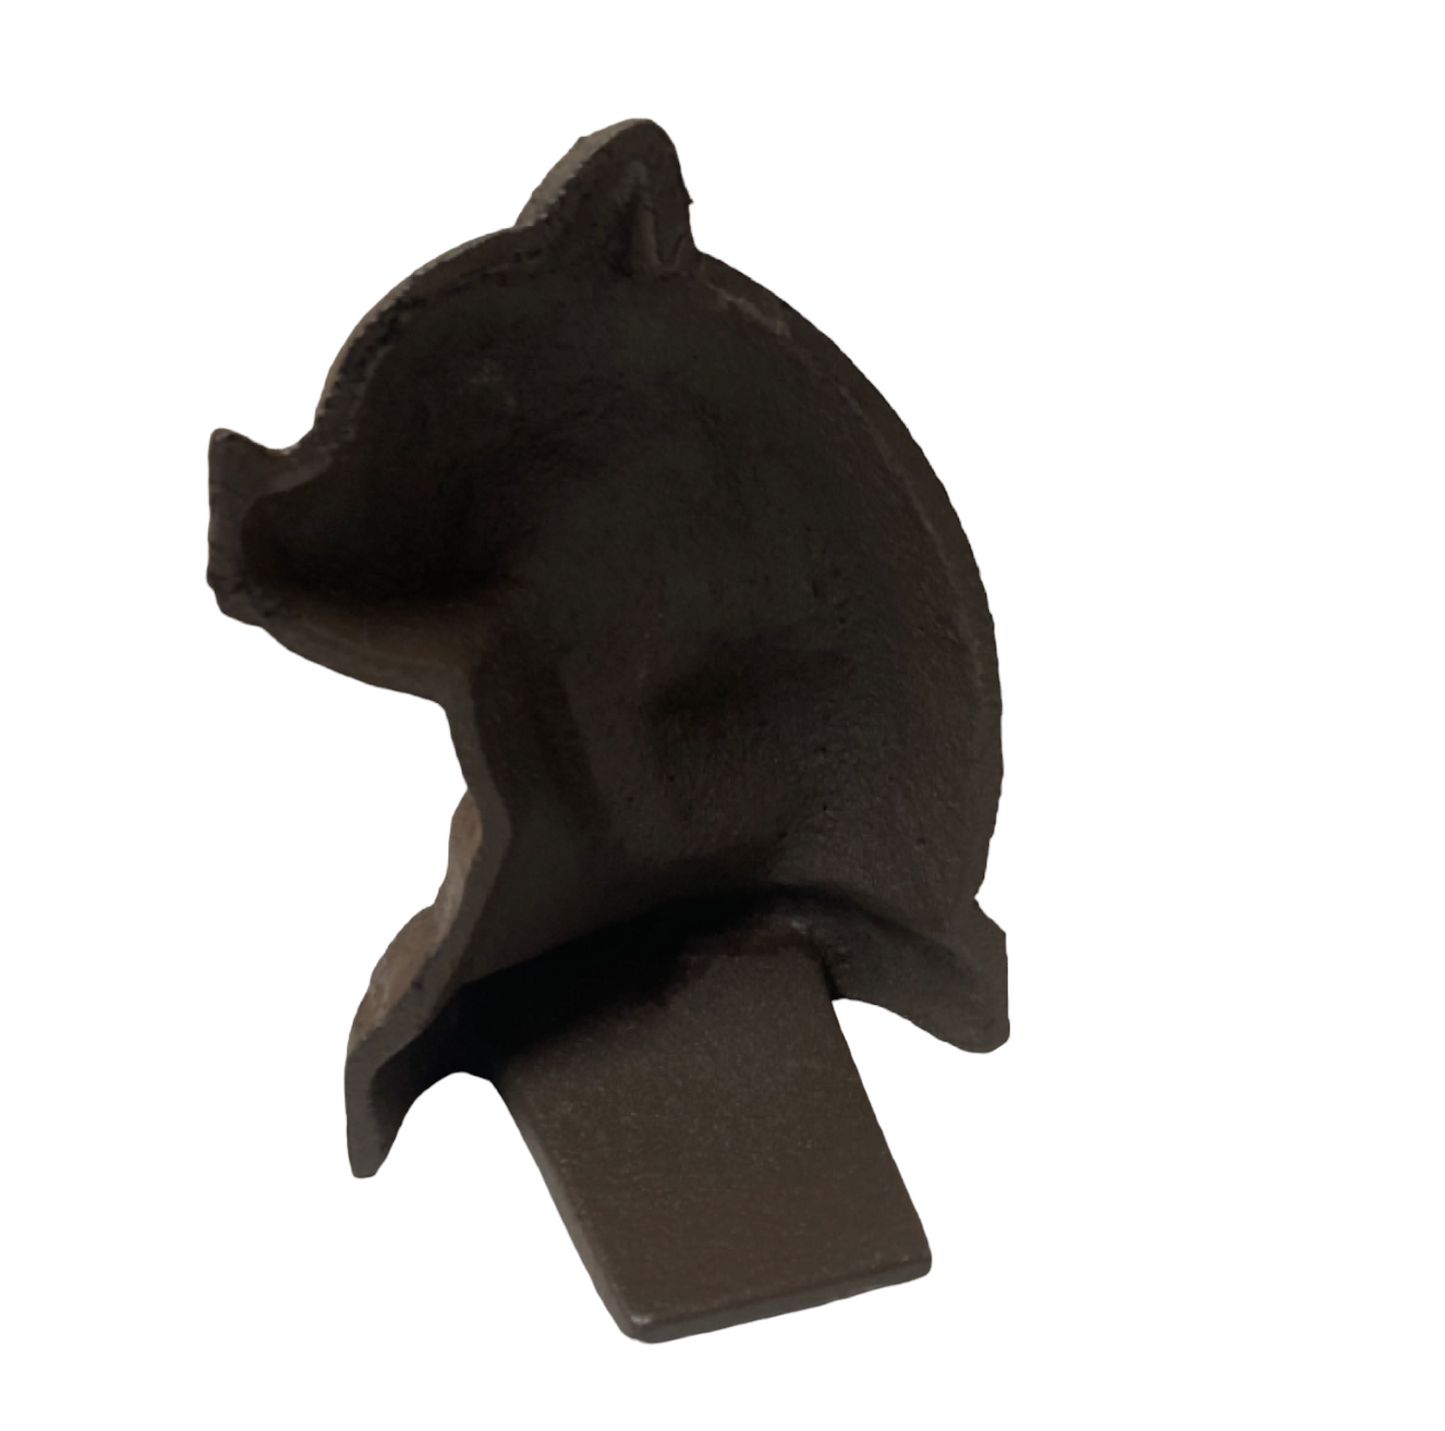 Pig Cast Iron Metal Door Stop Stopper Wedge - The Renmy Store Homewares & Gifts 